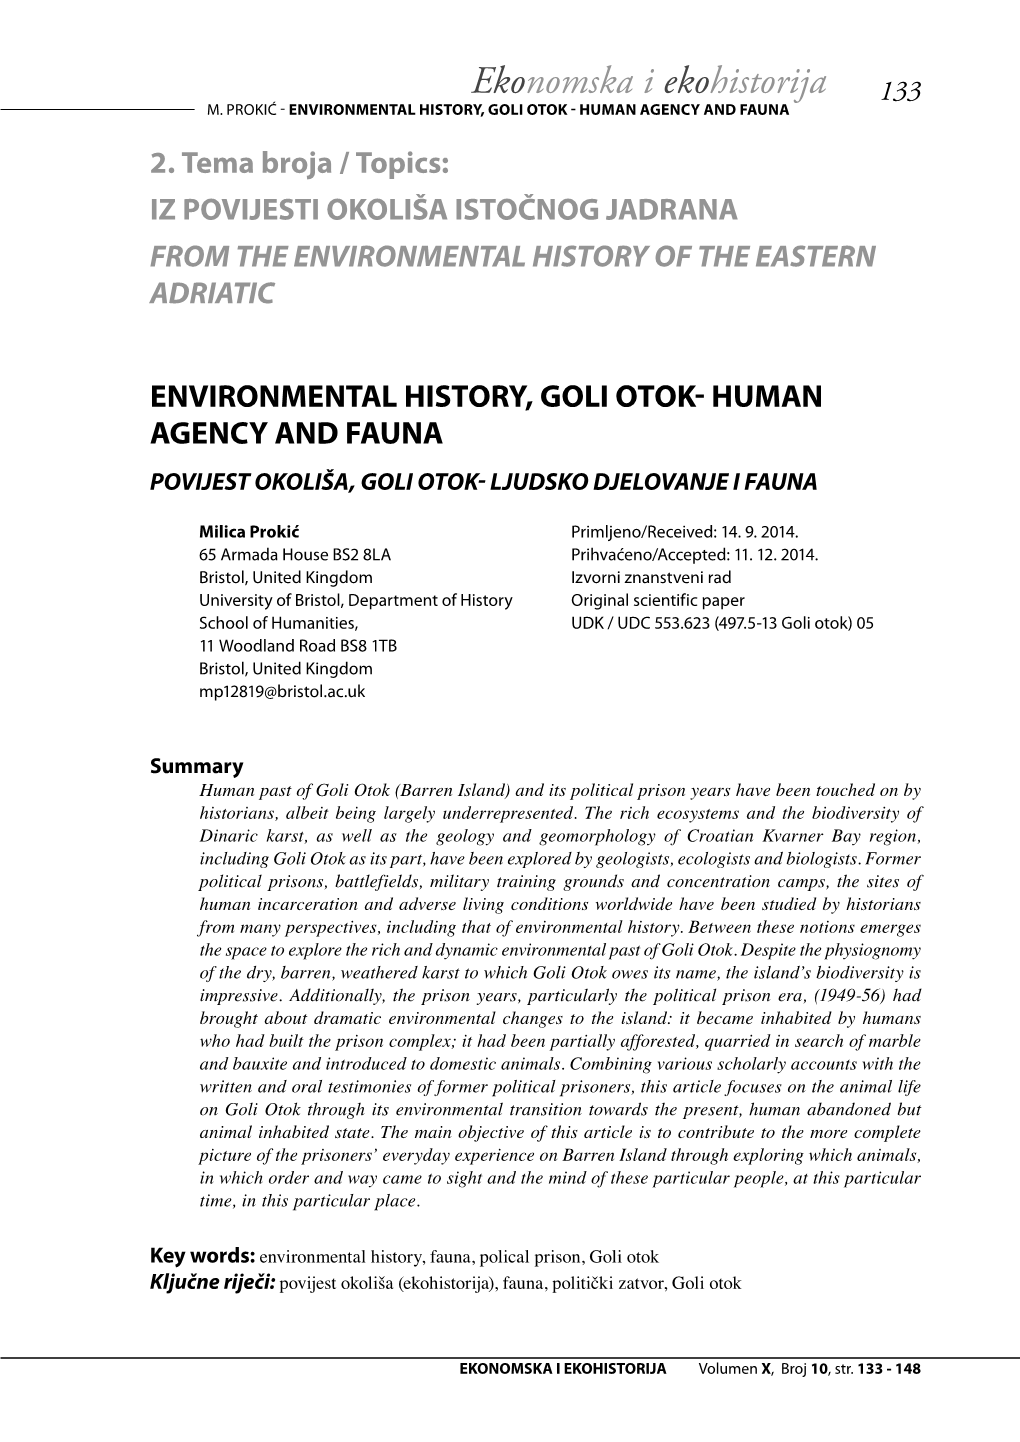 Environmental History, Goli Otok-Human Agency and Fauna